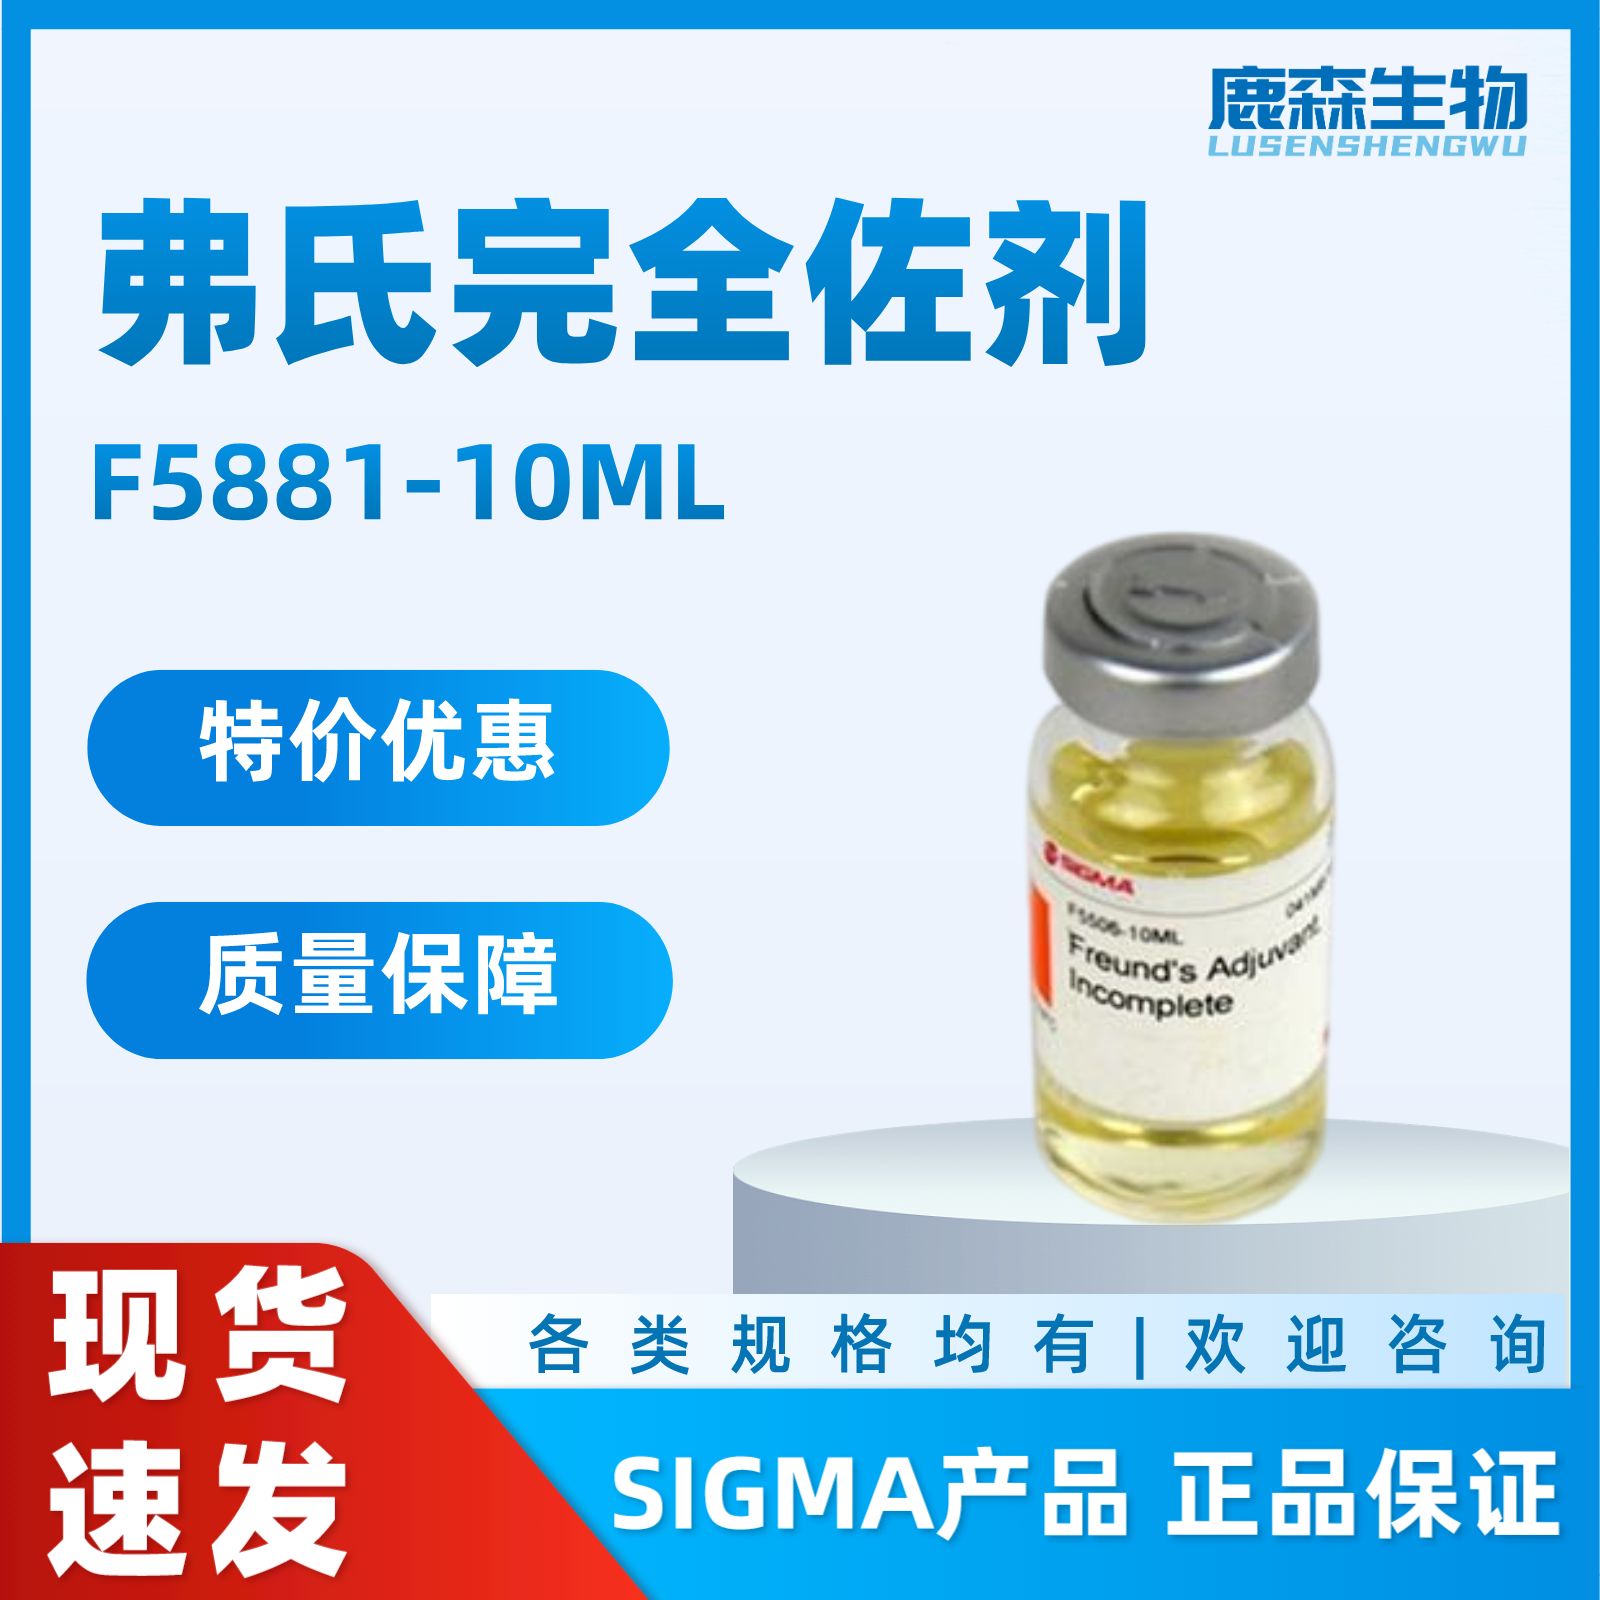 SIGMA 弗氏完全佐剂 F5881